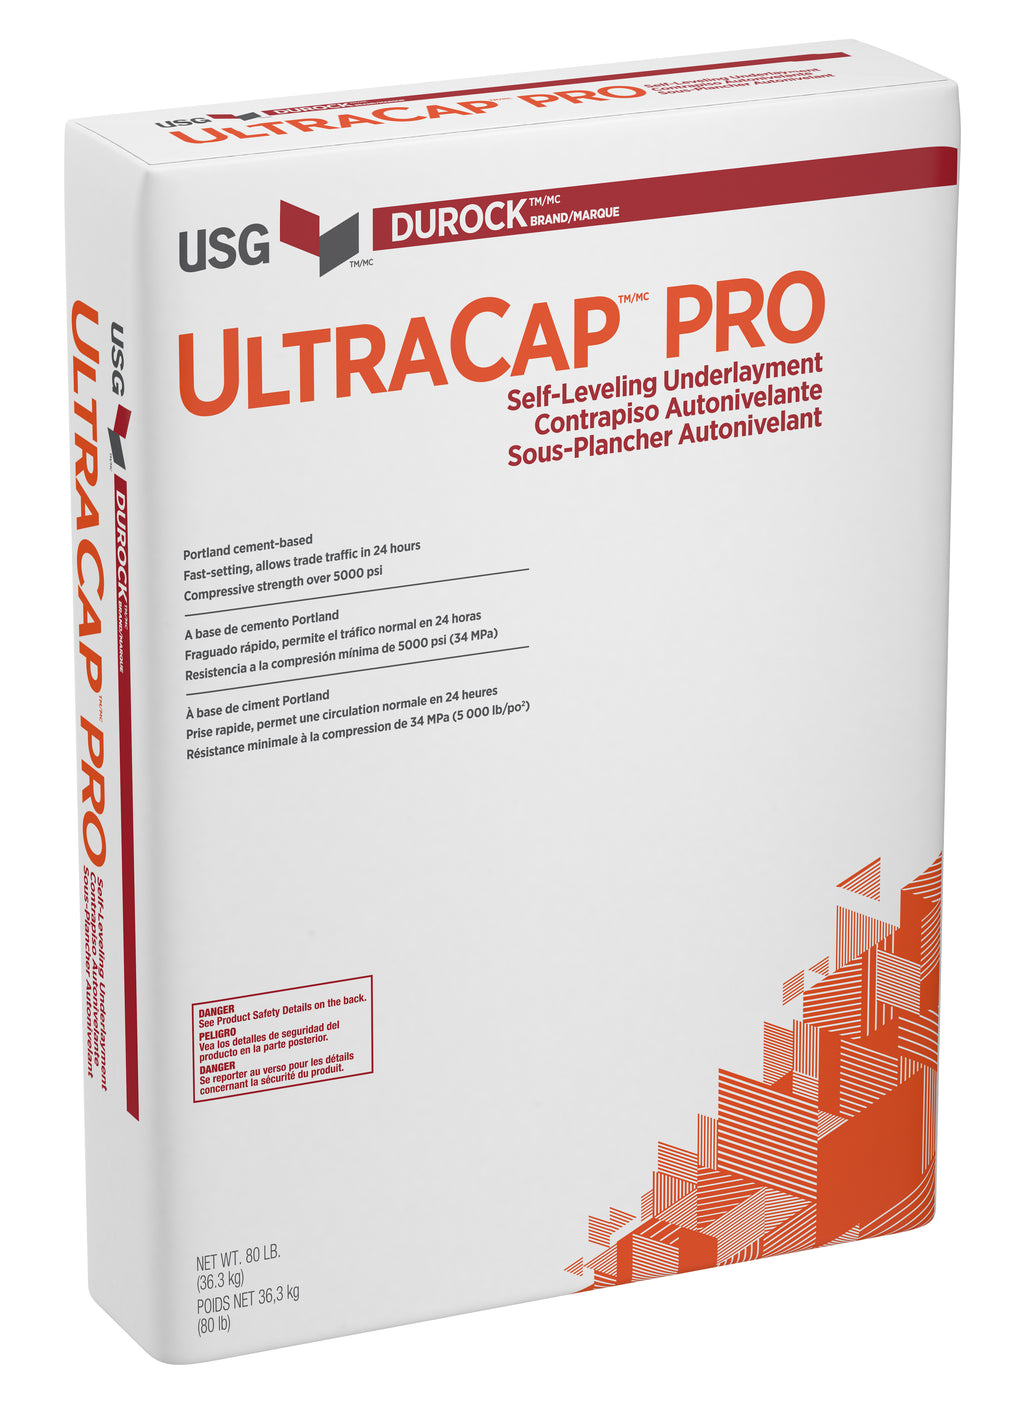 USG Durock UltraCap PRO Self Leveling Cement Based Underlayment